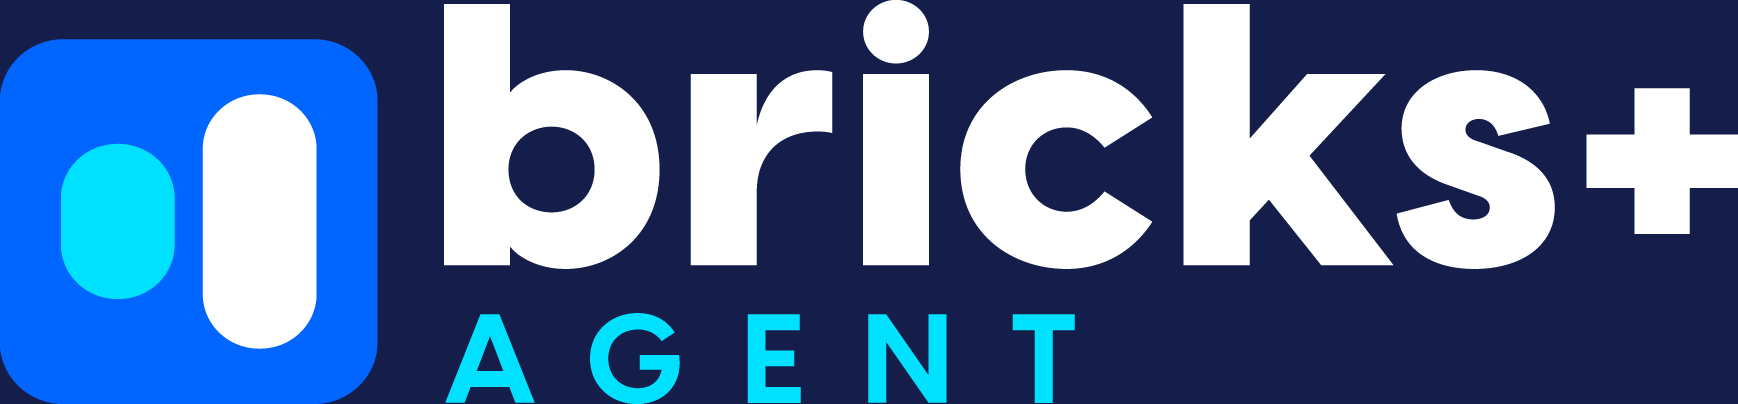 Bricks and Agent logo